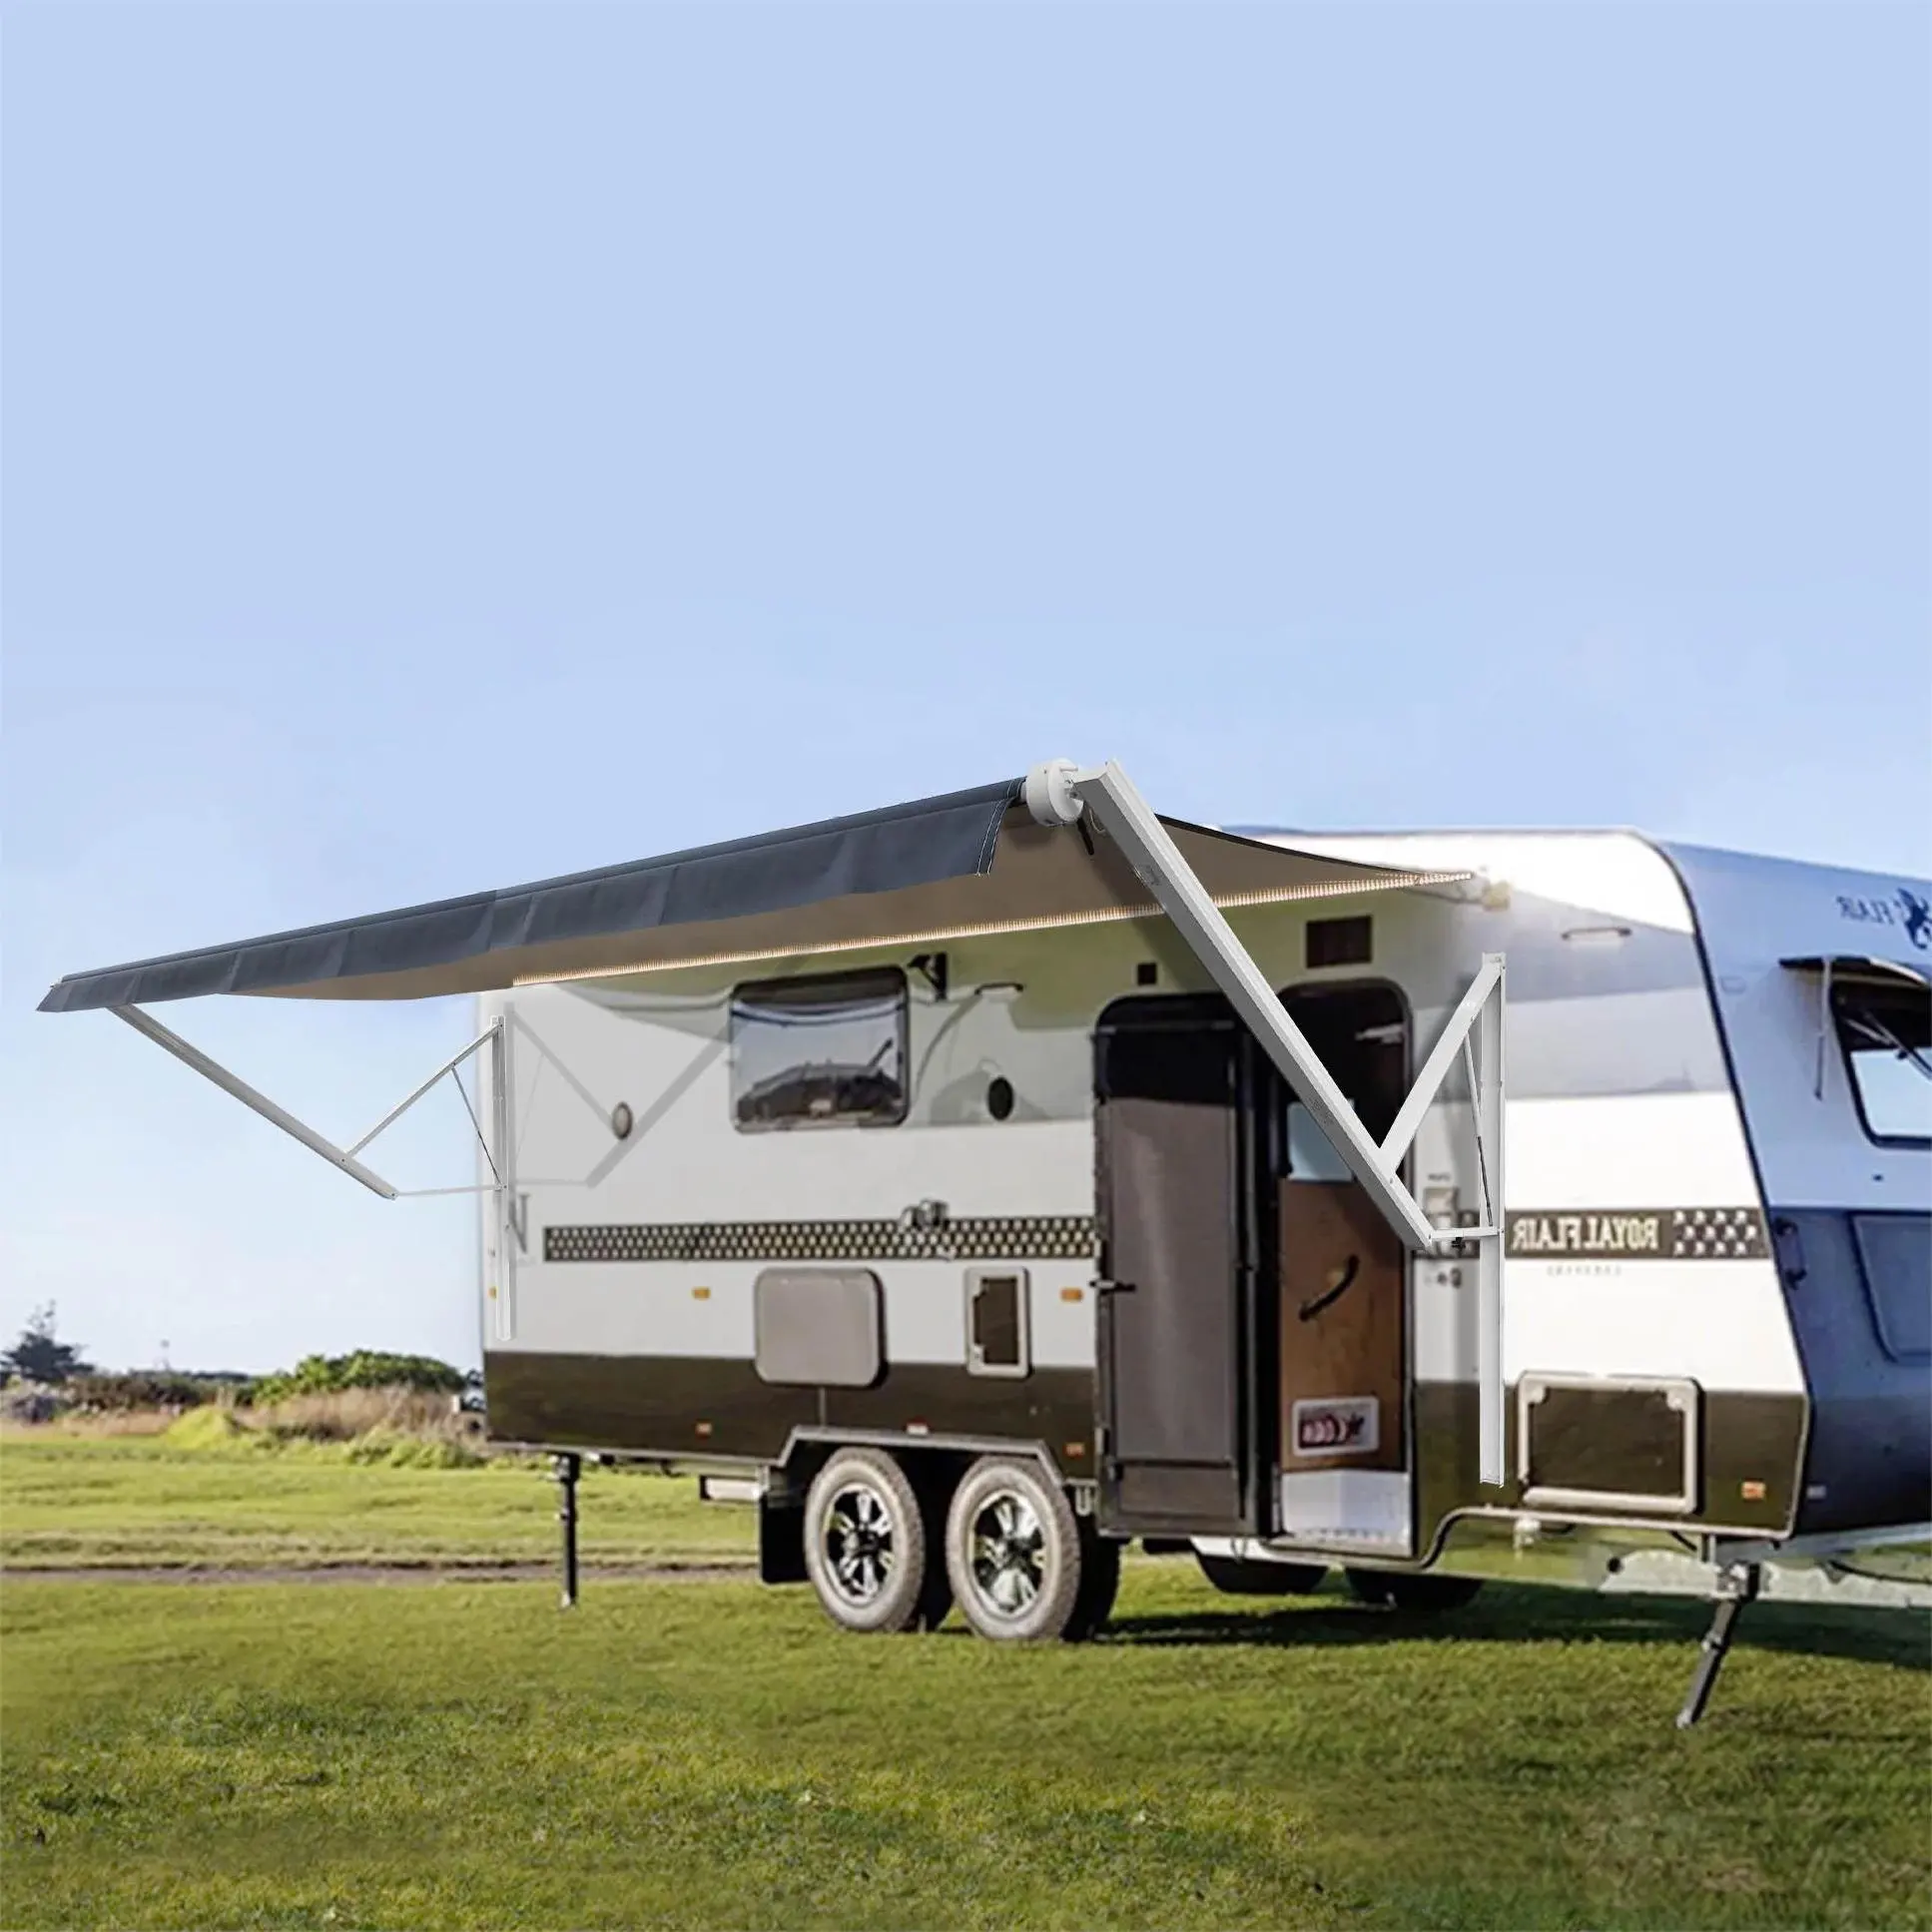 Wareda luxuosa caravana para acampamento ao ar livre toldo retrátil para trailer e trailer para estacionamento